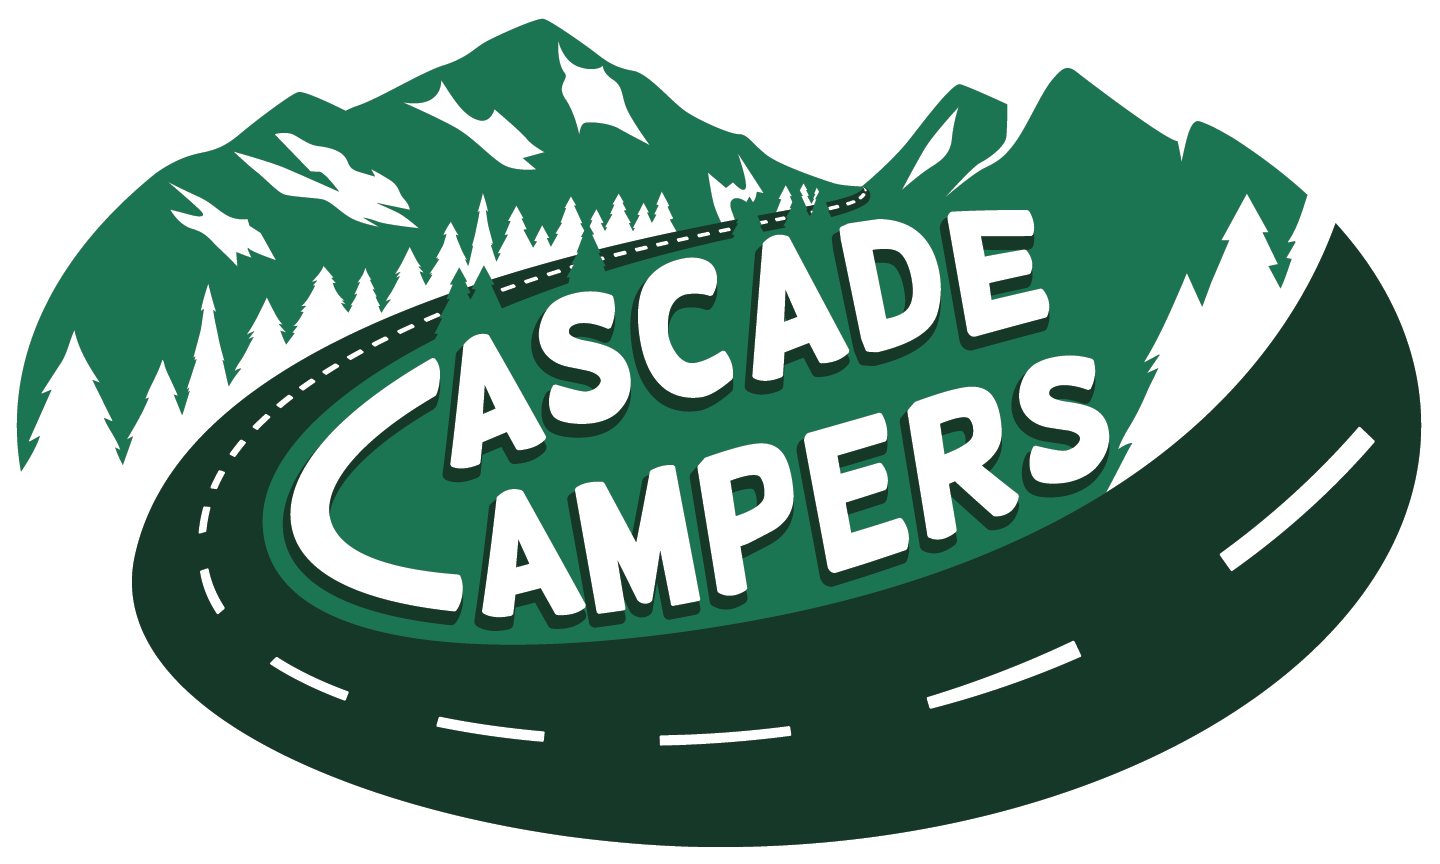 Cascade Campers